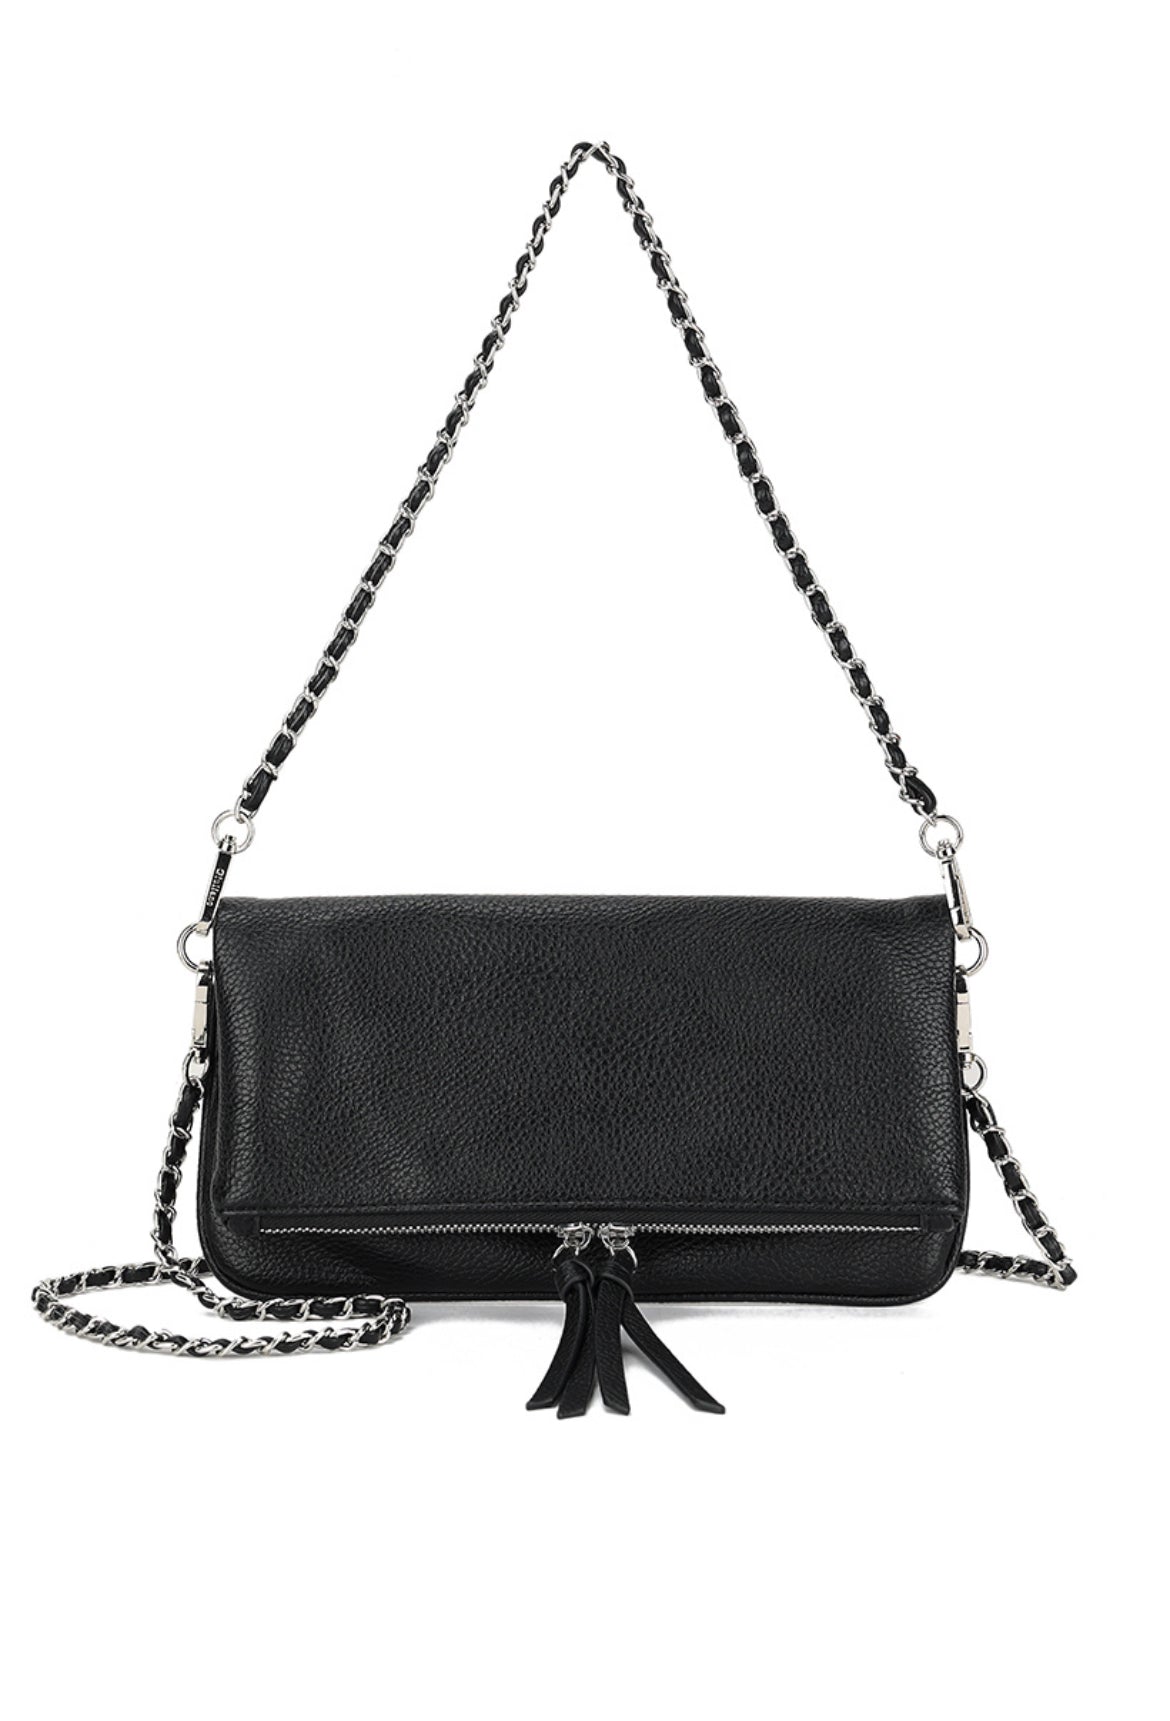 Chain bag black -